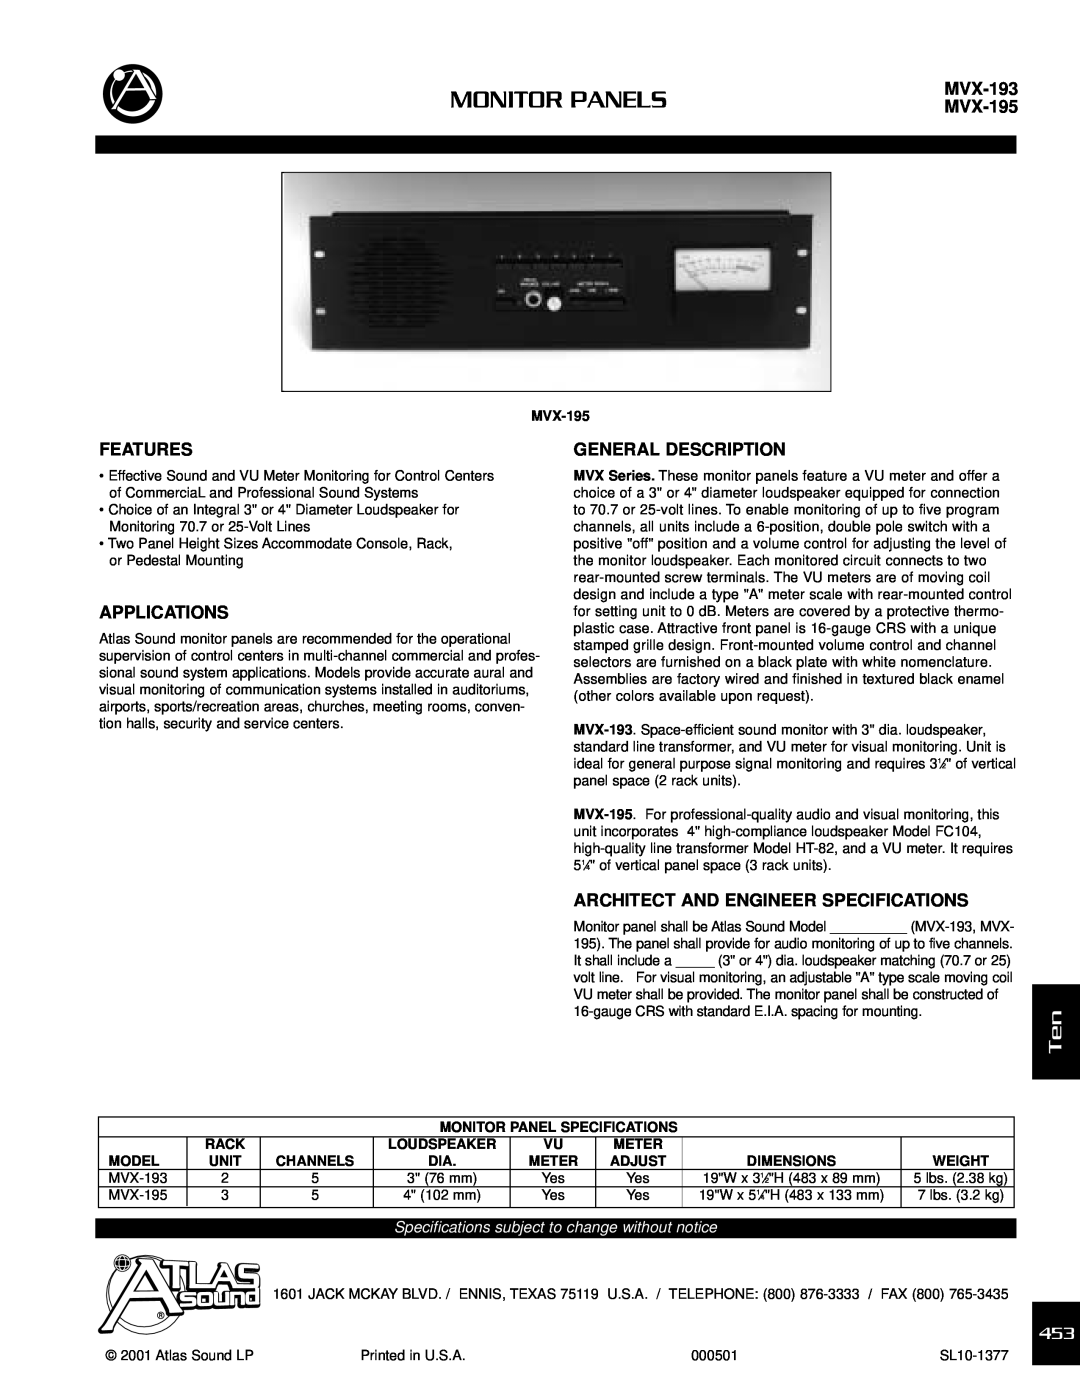 Atlas Sound specifications Monitor Panels, MVX-193 MVX-195, Features, Applications, General Description 